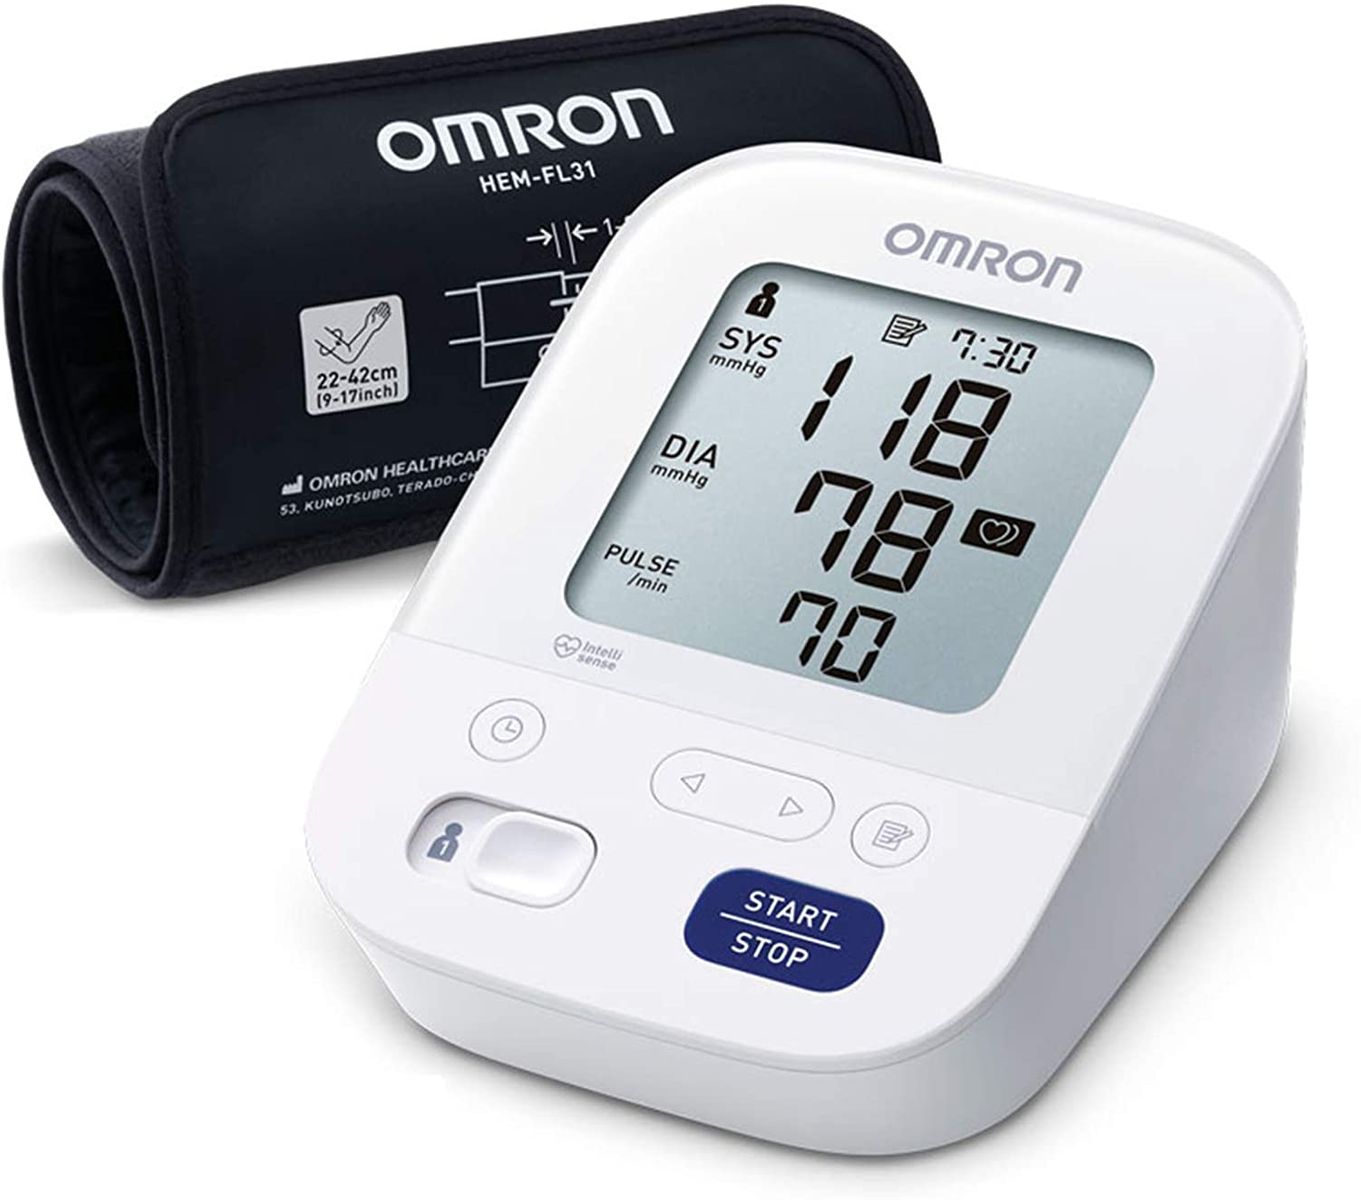 Omron X3 Comfort Blood Pressure Monitor - Home blood pressure monitor - With Intelli Wrap cuff for precise measurements